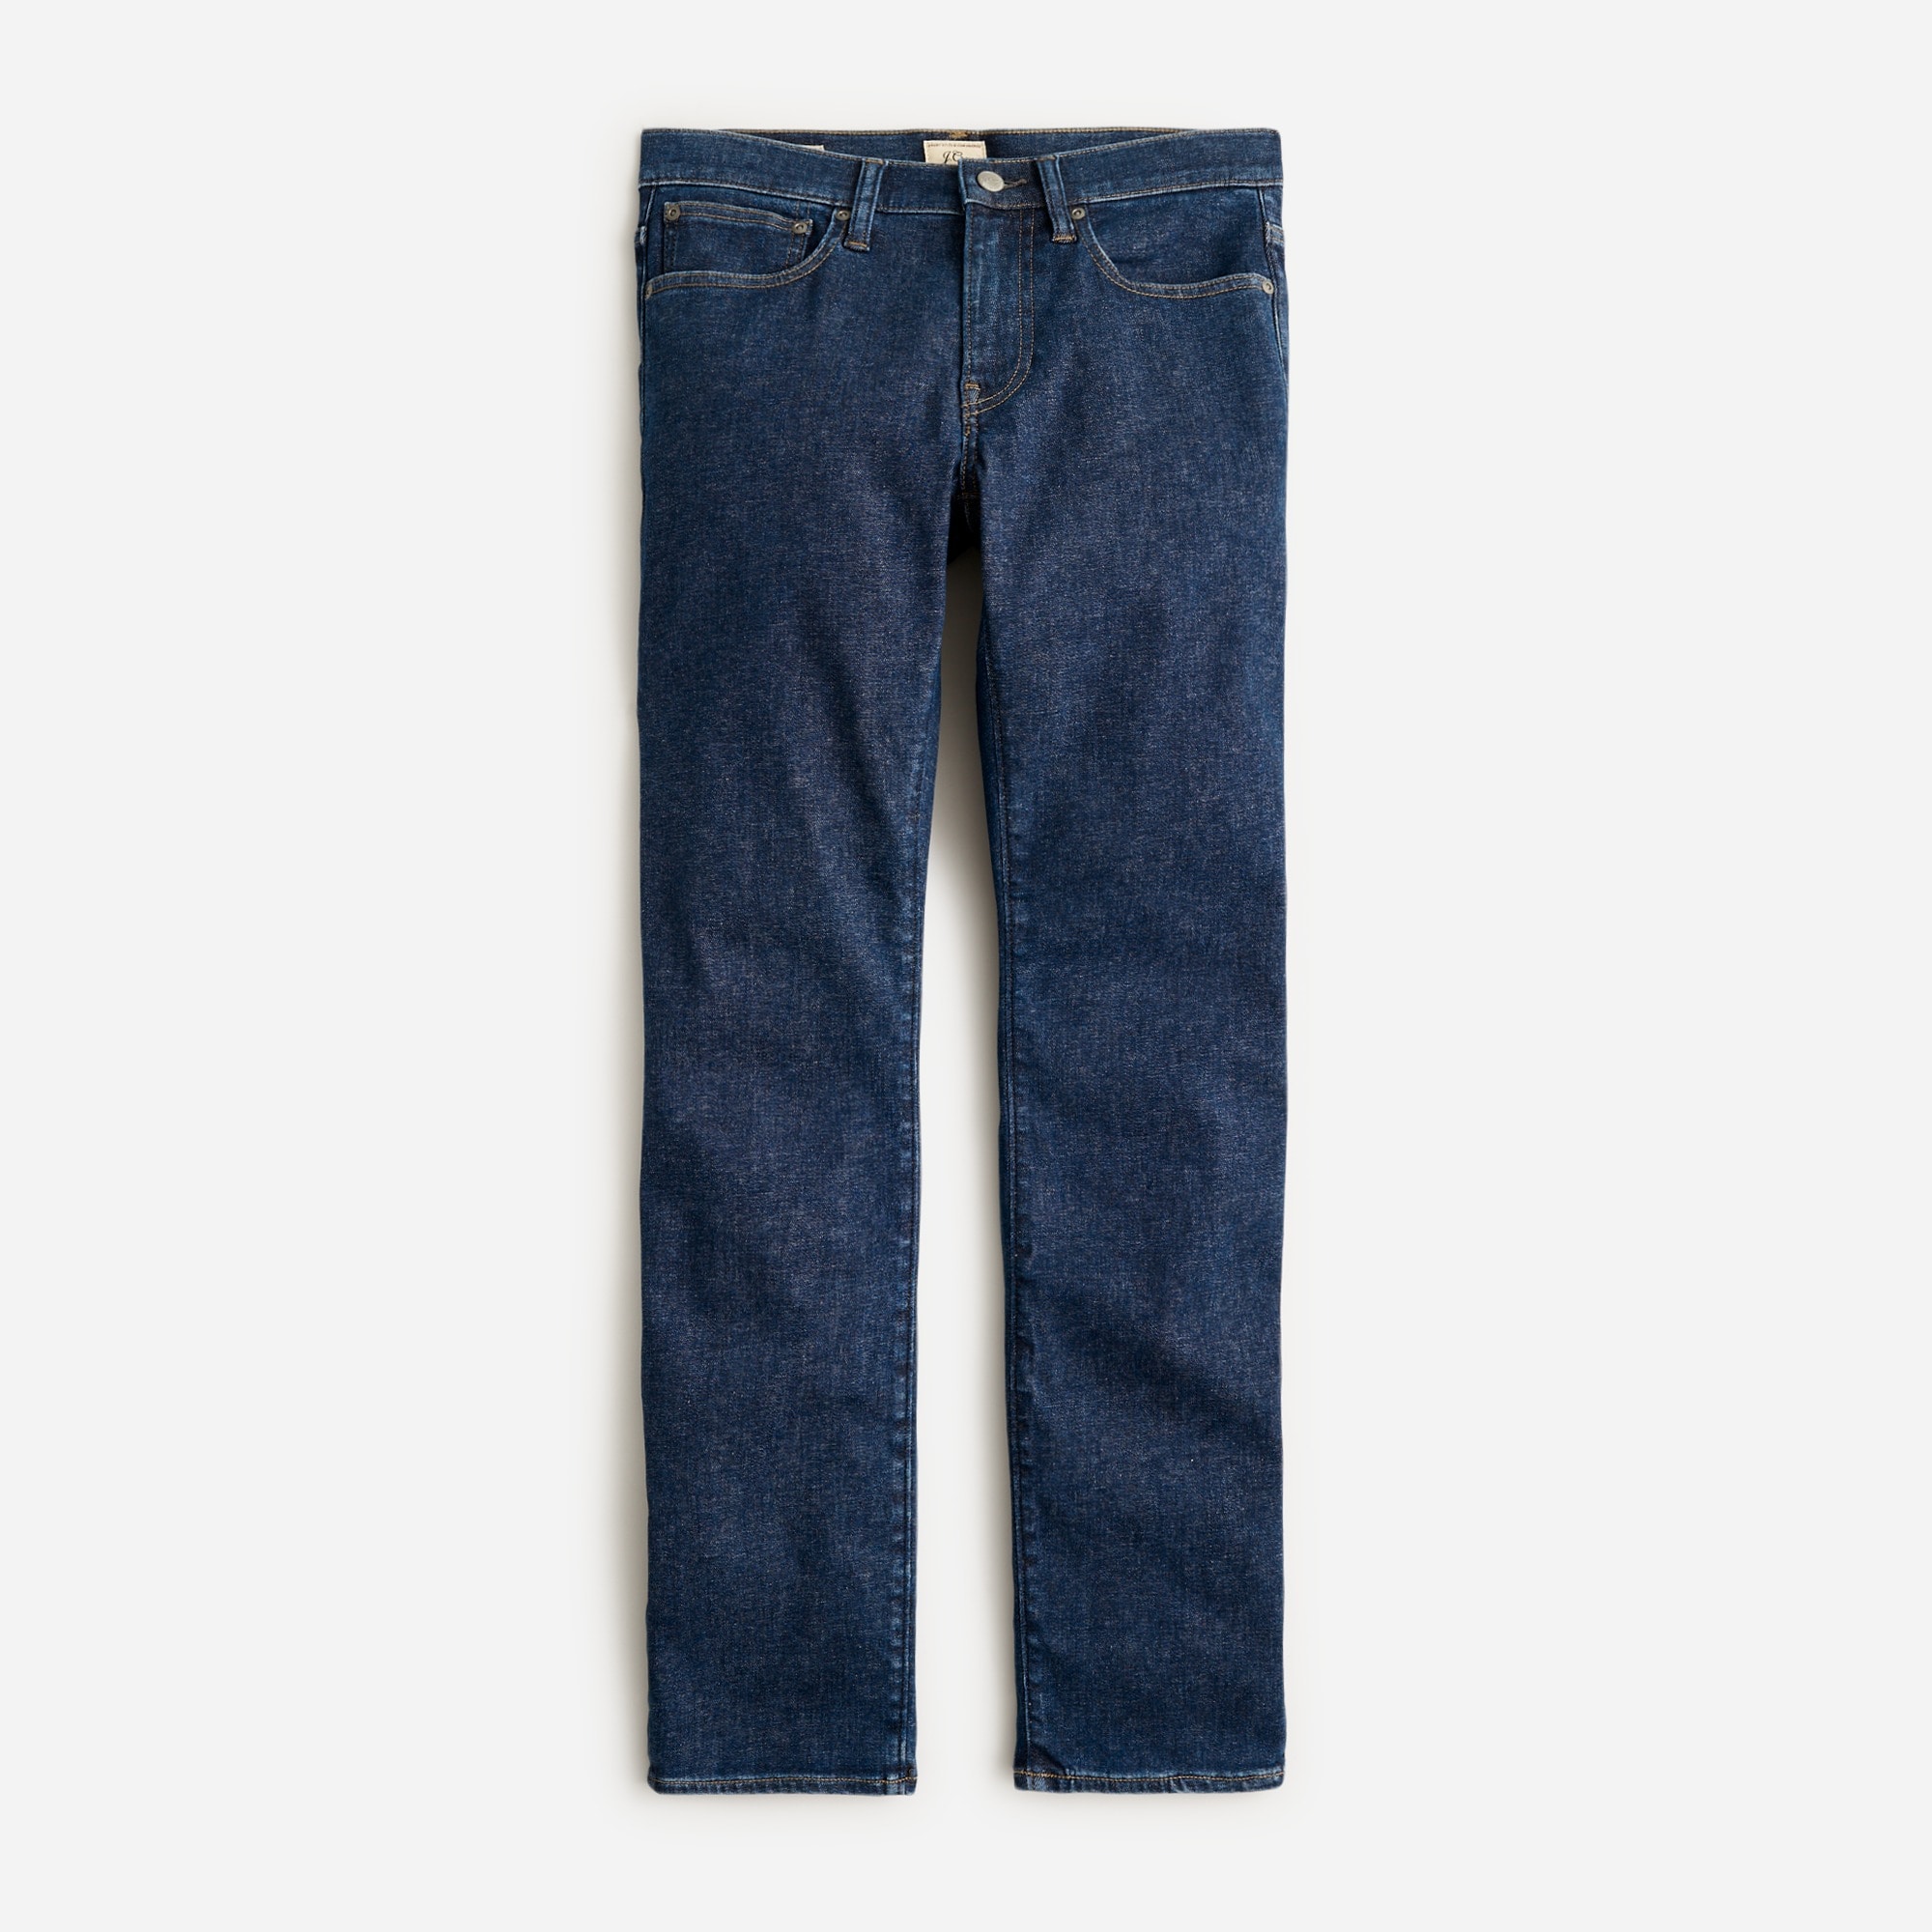 mens 484 Slim-fit stretch jean in medium wash